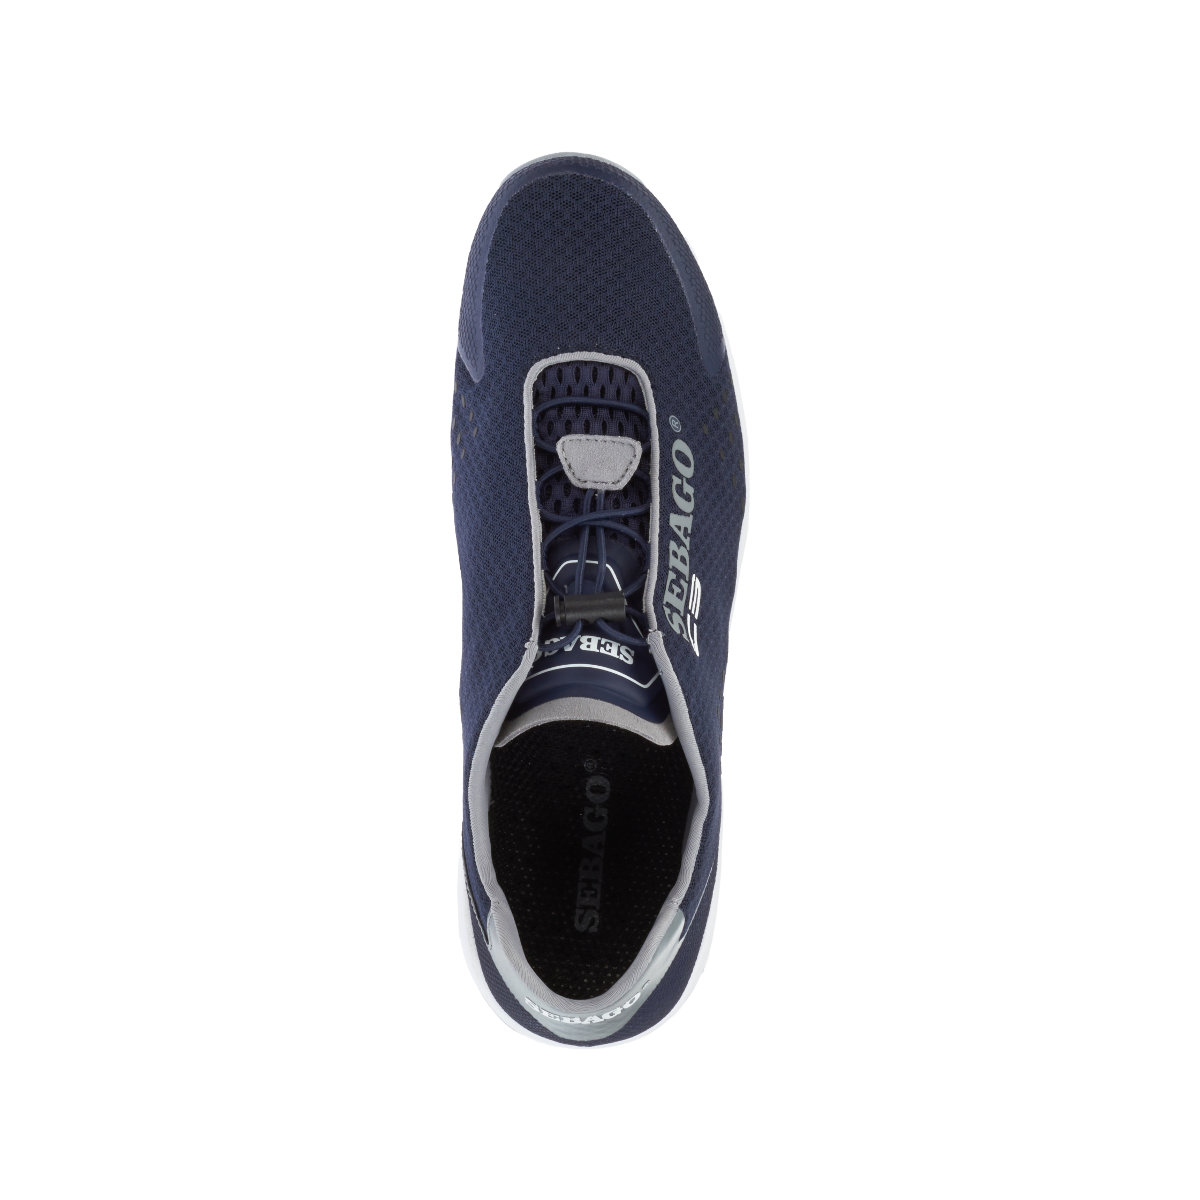 Sebago Cyphon Sea Sport chaussures à voile homme navy, taille EU 44 (US 10)